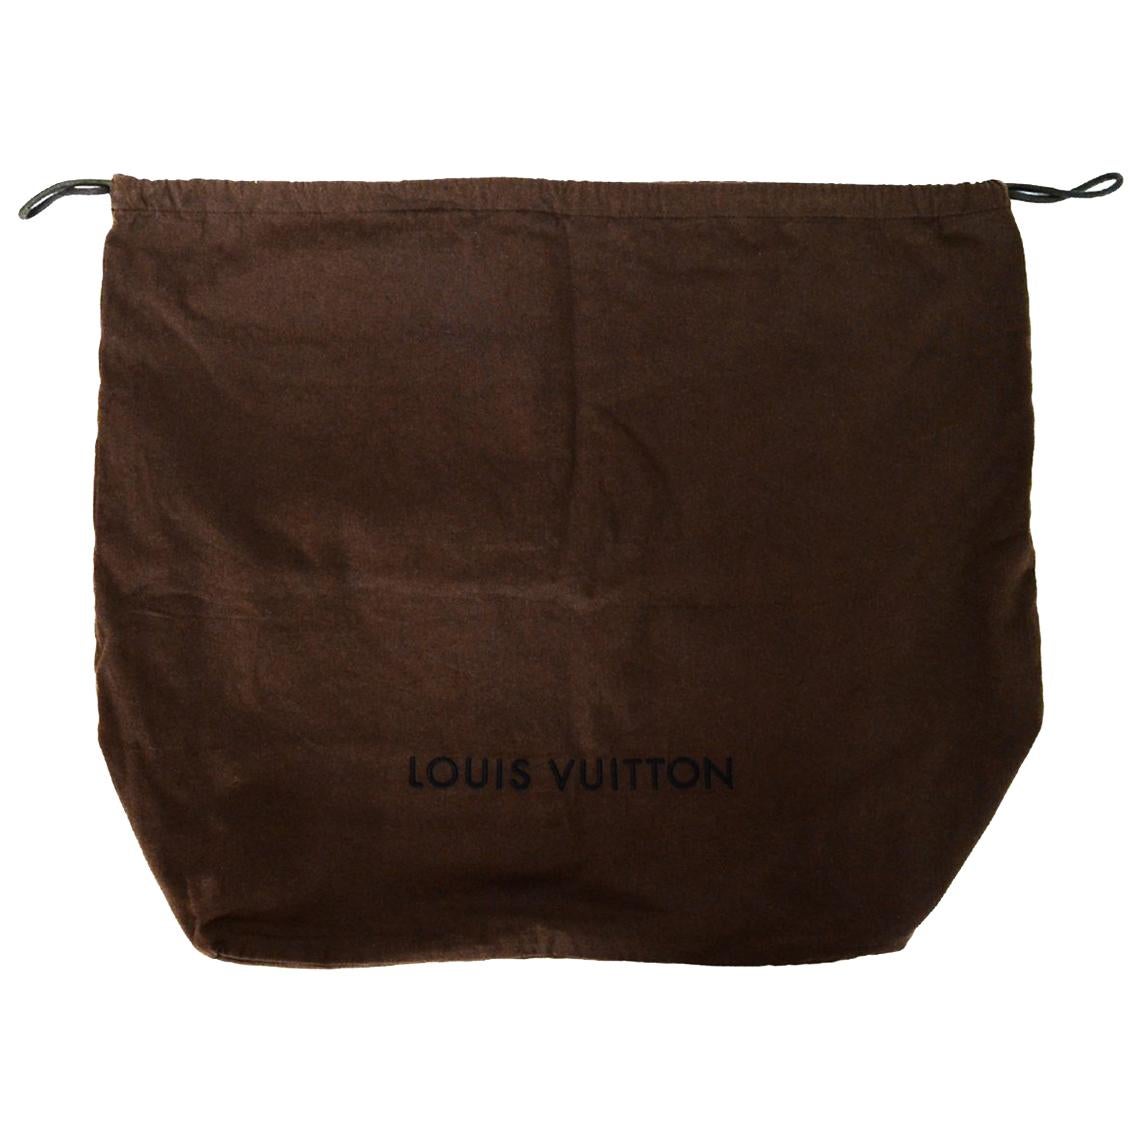 Authentic Louis Vuitton Empty Large Drawstring Dust bag 19.5” X 11.7 Inches.